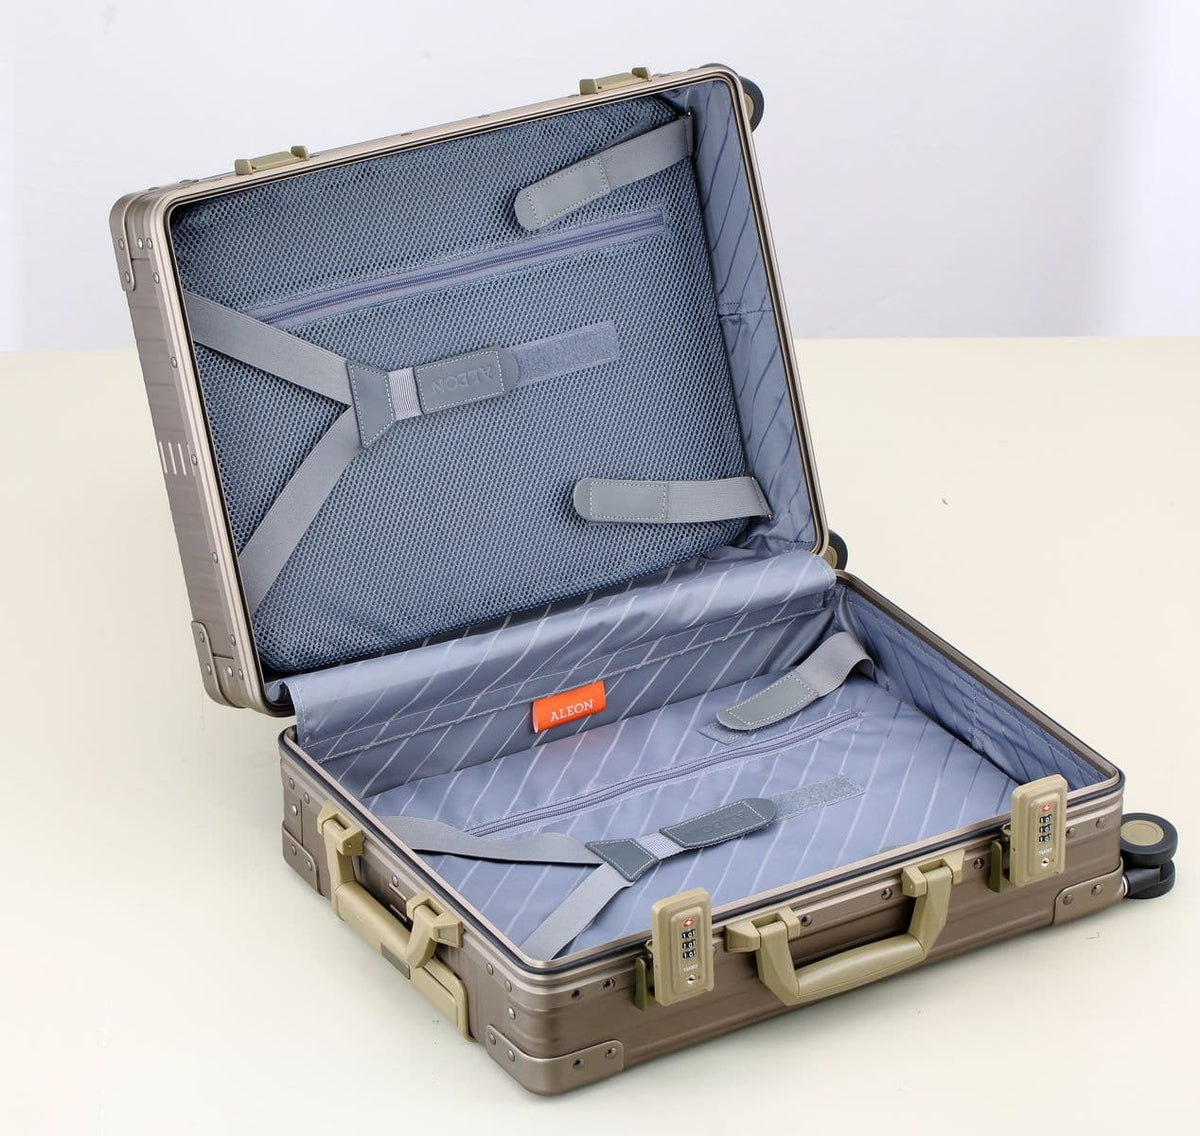 Aleon 21″ Aluminum International Carry-On Luggage